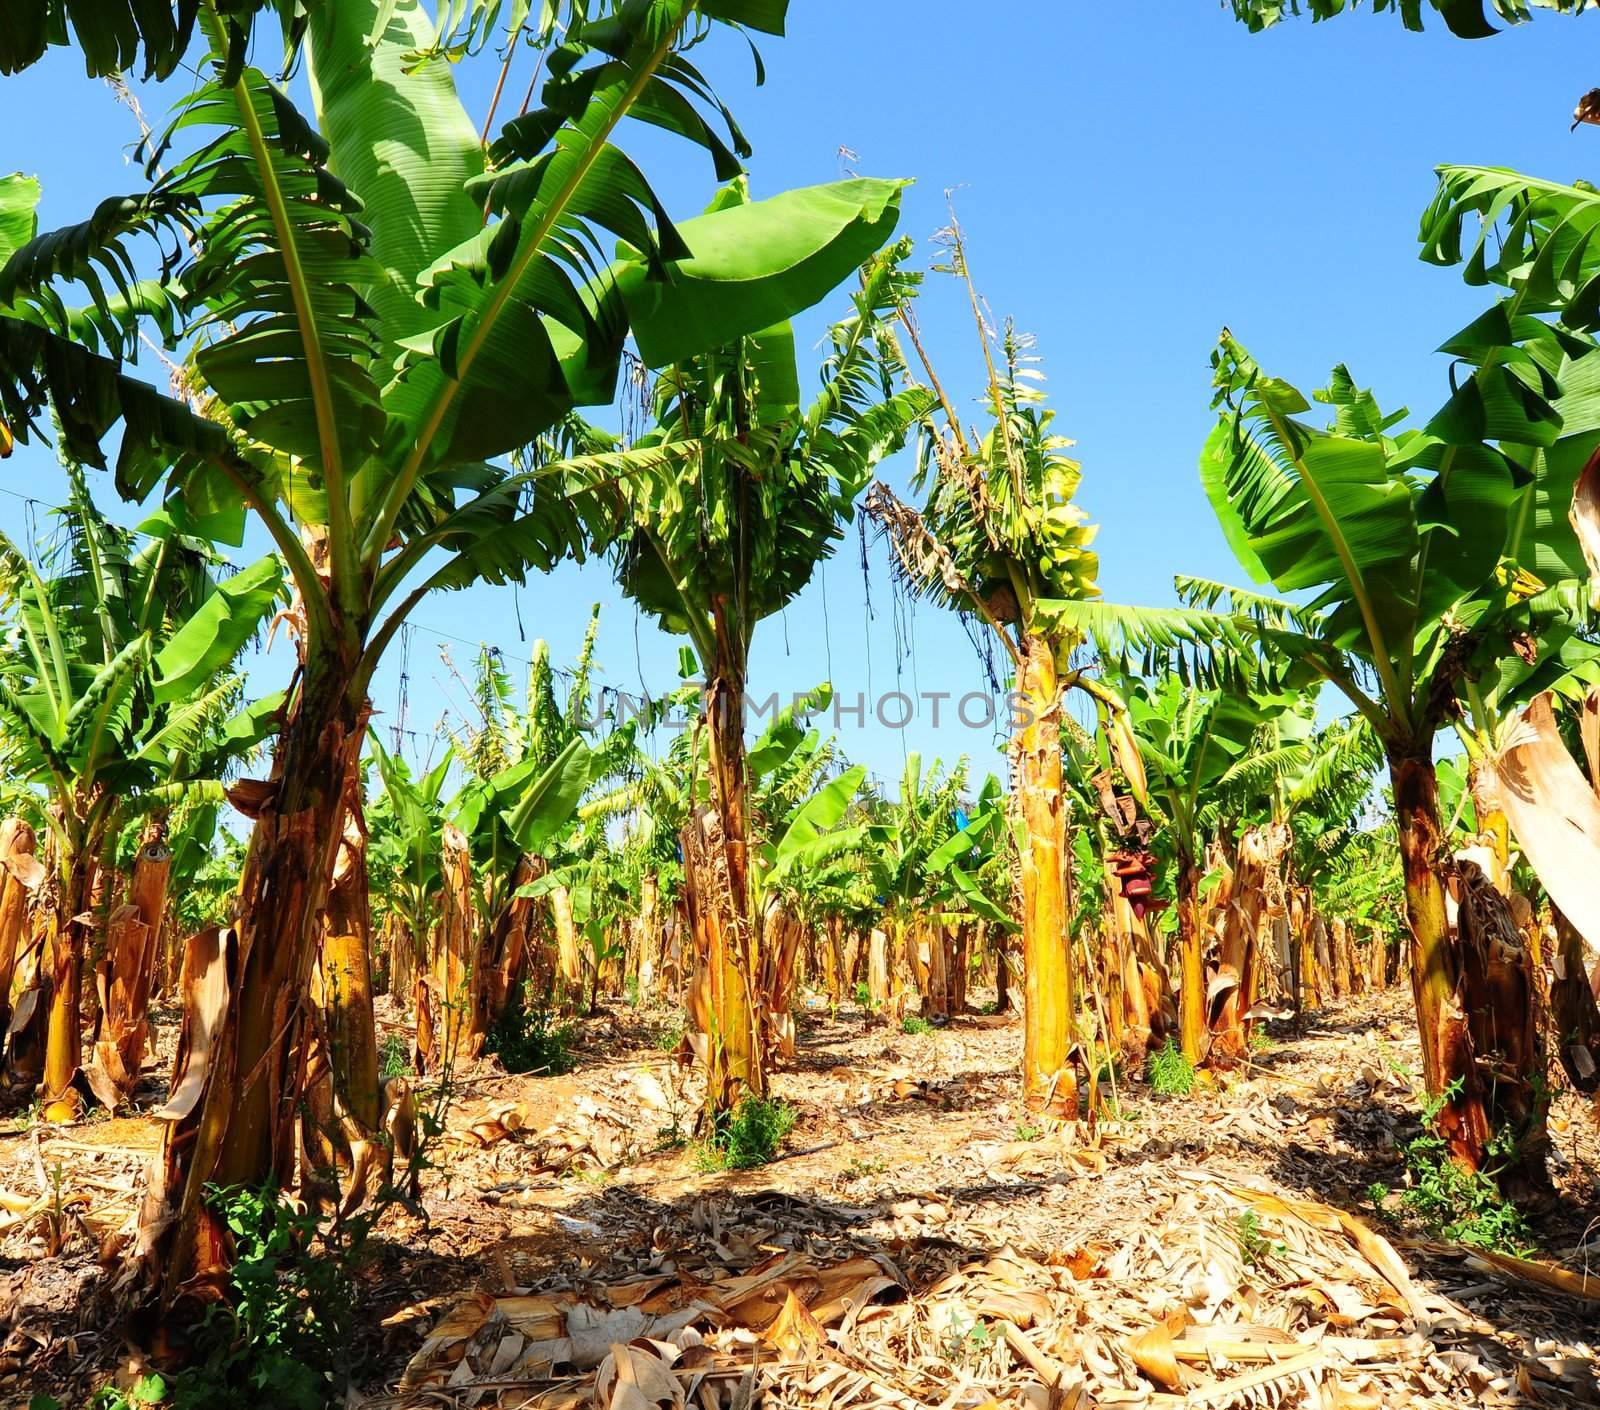 Banana Plantation After Gathering In The Harvest